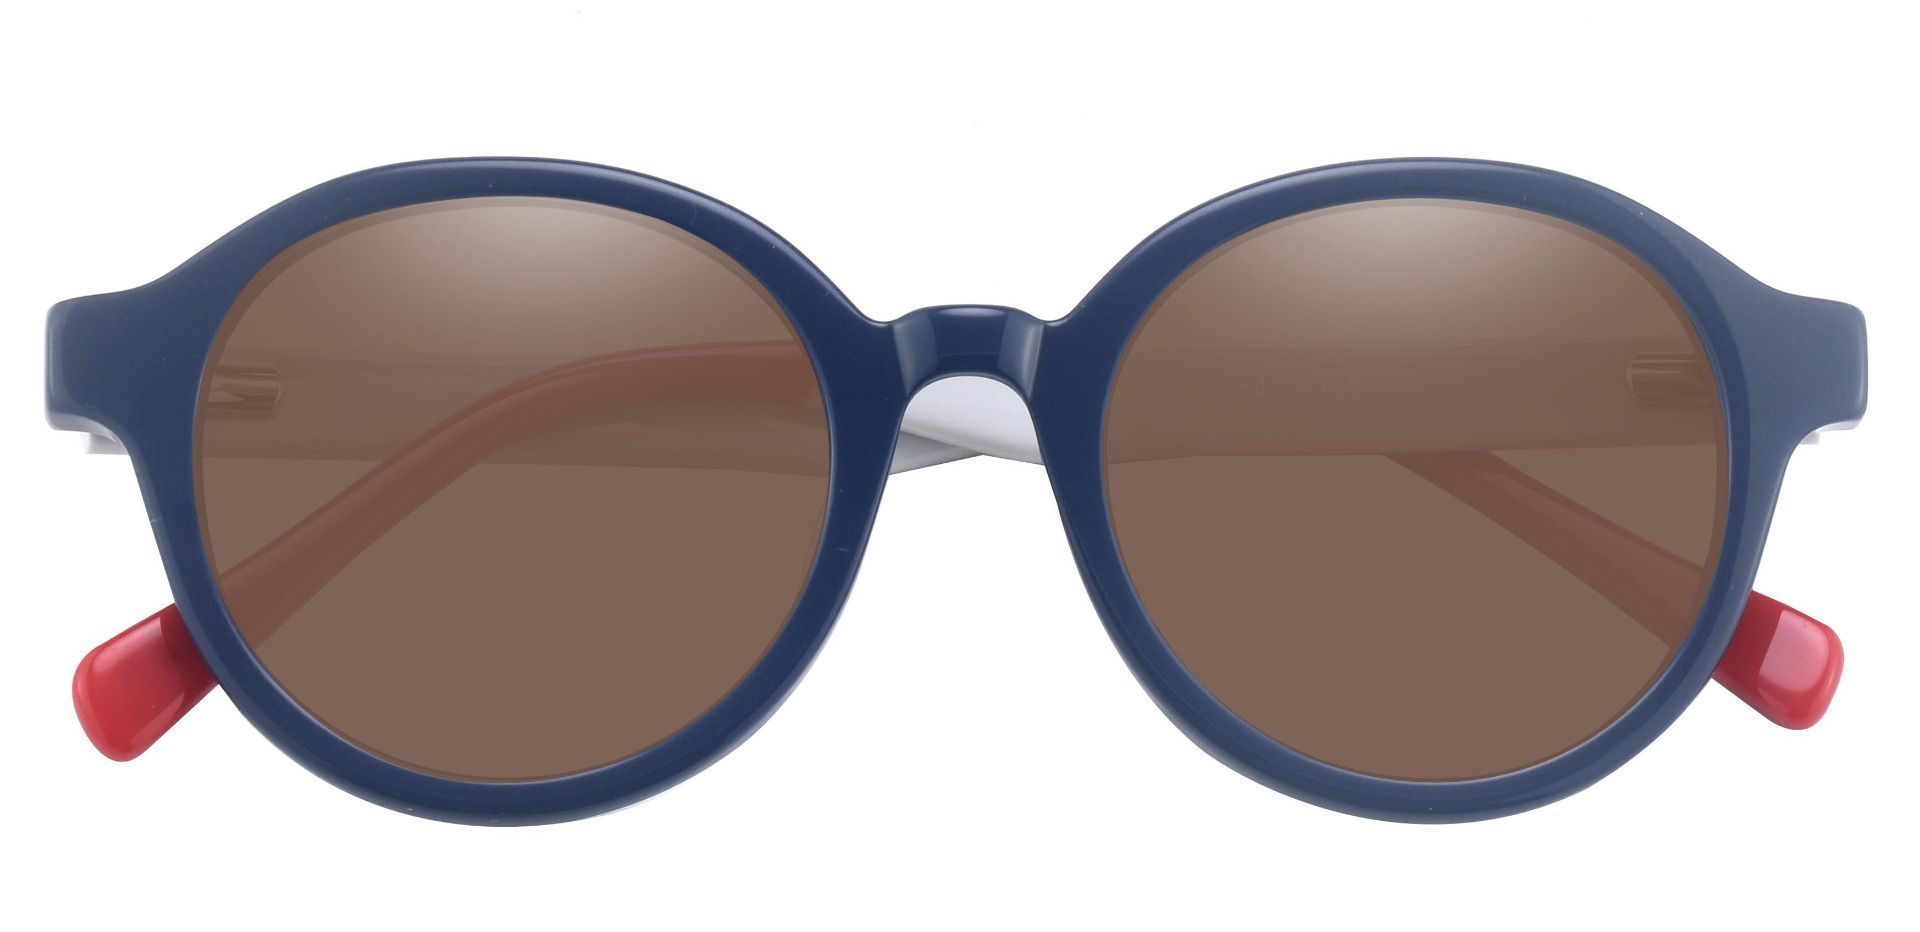 Roxbury Round Prescription Sunglasses - Blue Frame With Brown Lenses